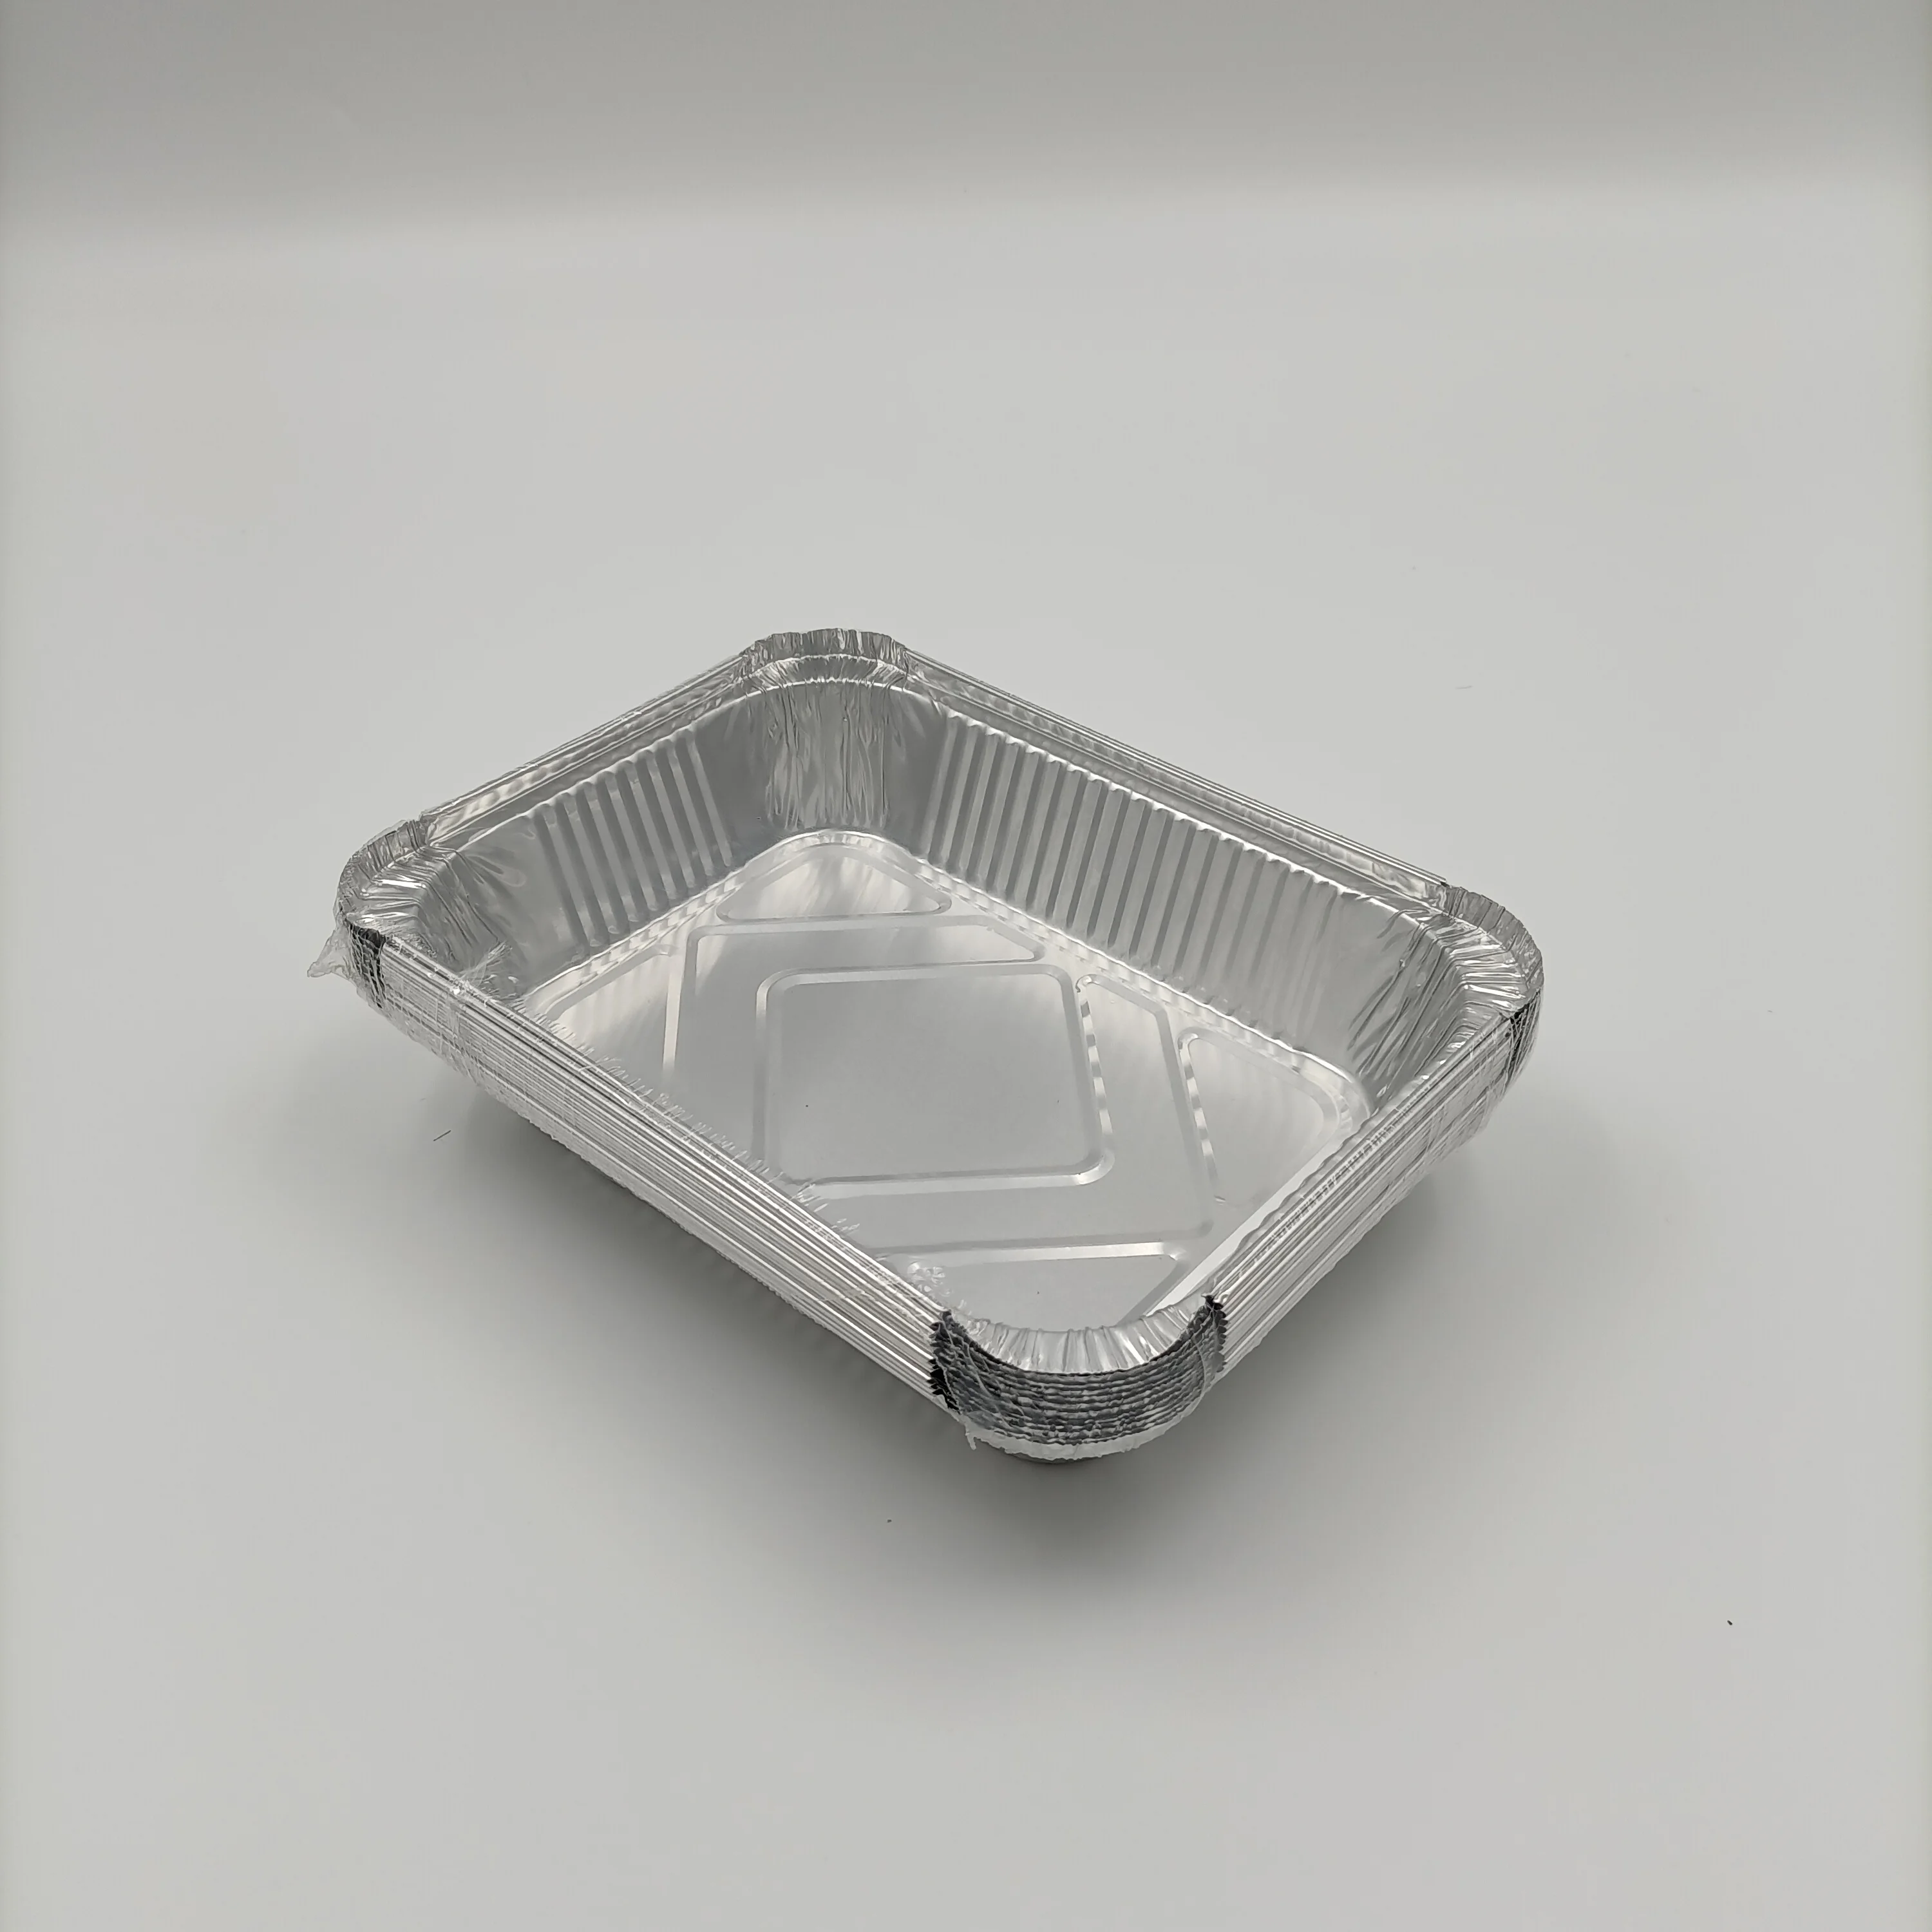 200x110x55mm aluminium foil pans bread loaf disposable baking trays